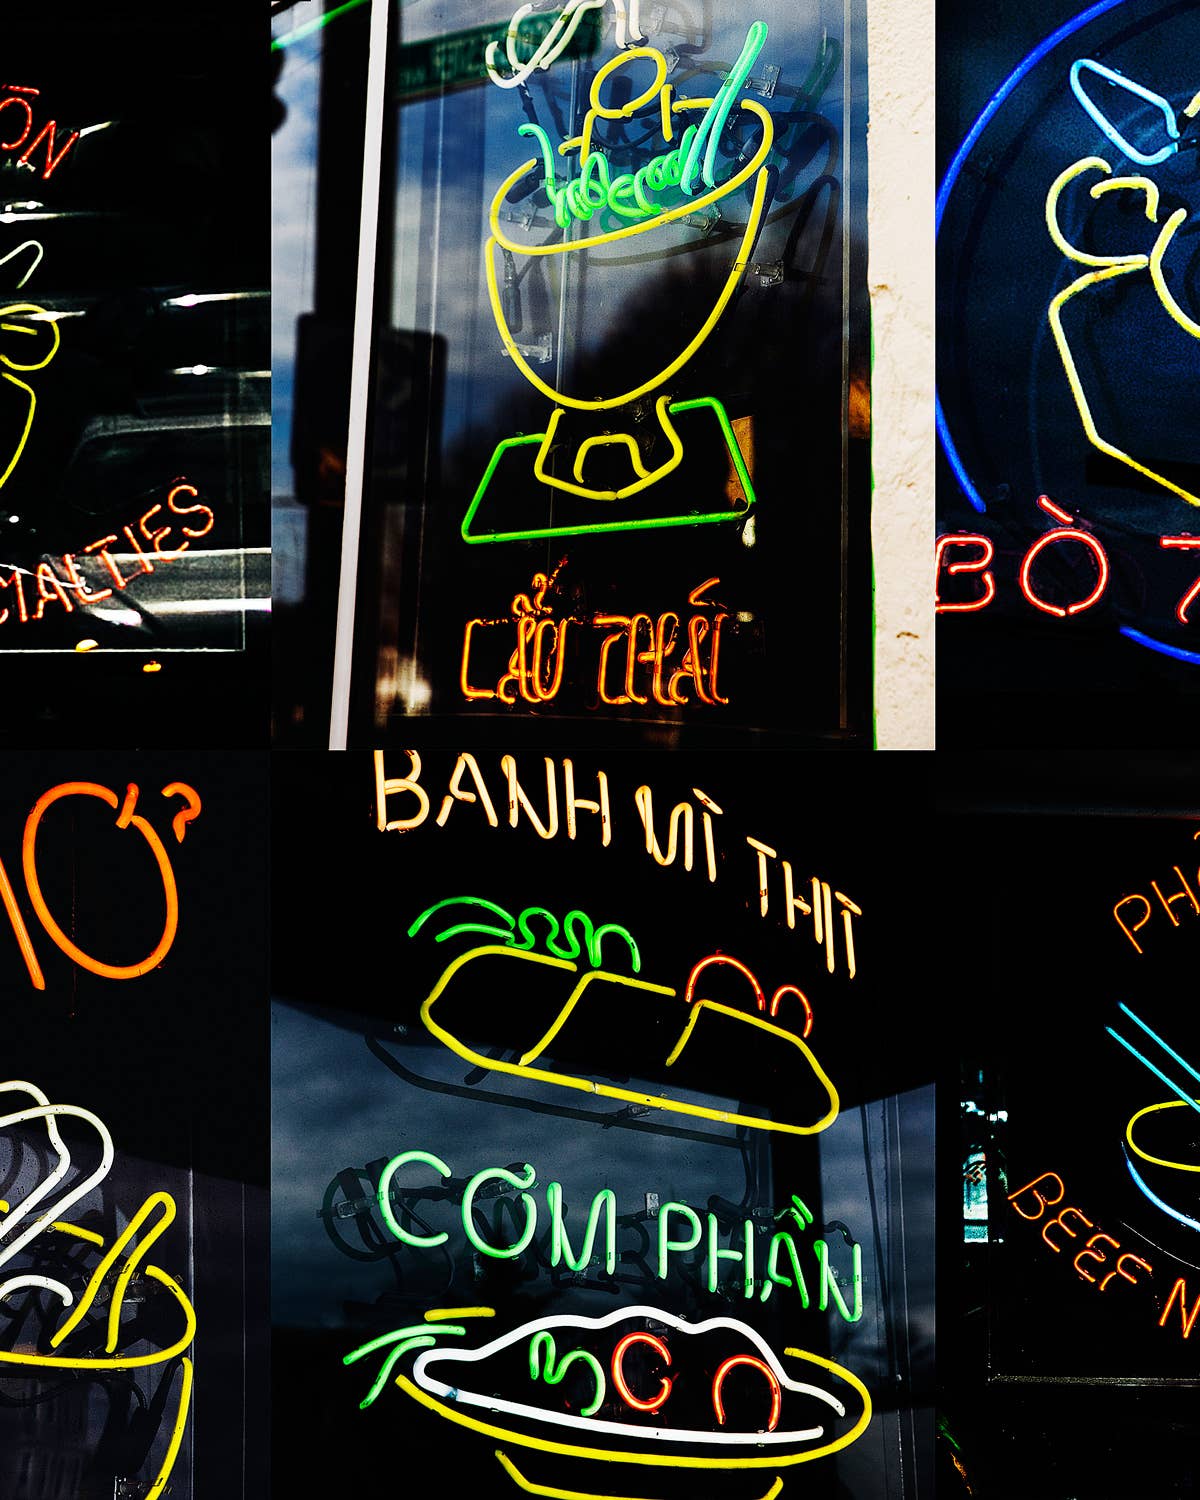 The Incredible Neon Artwork of Boston’s Vietnamese Restaurants